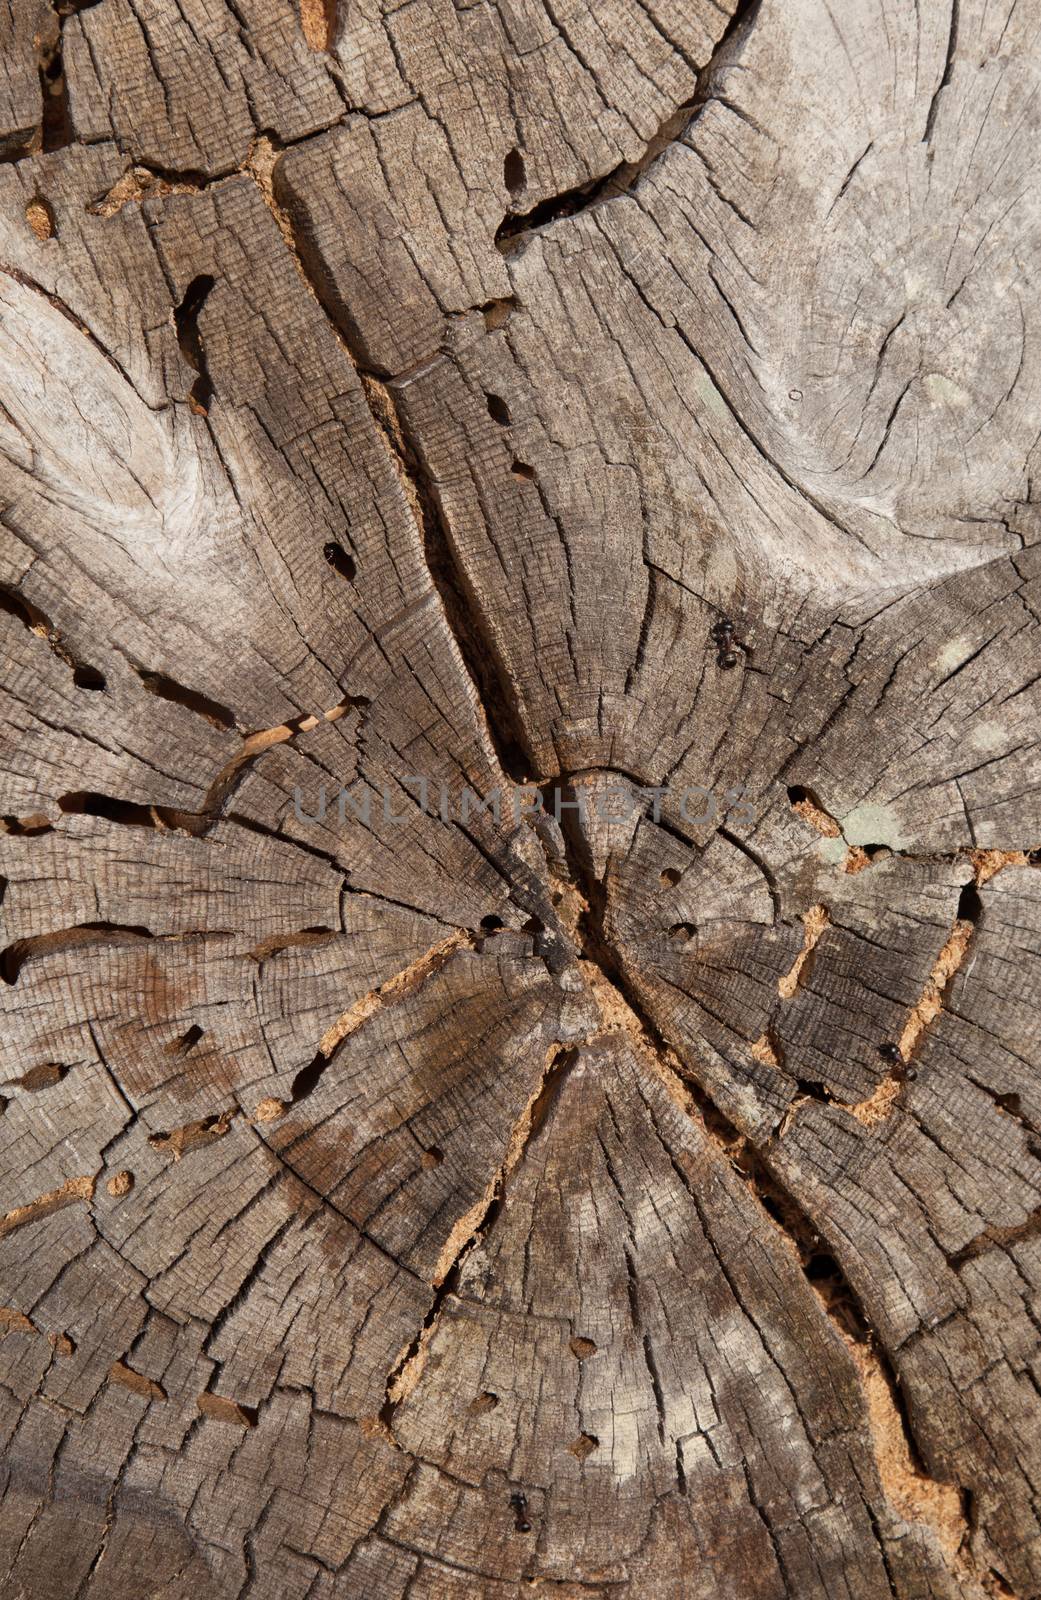 Cross-section of the old tree carpenter ant-eaten. (kamponotus gerkuleanus) 